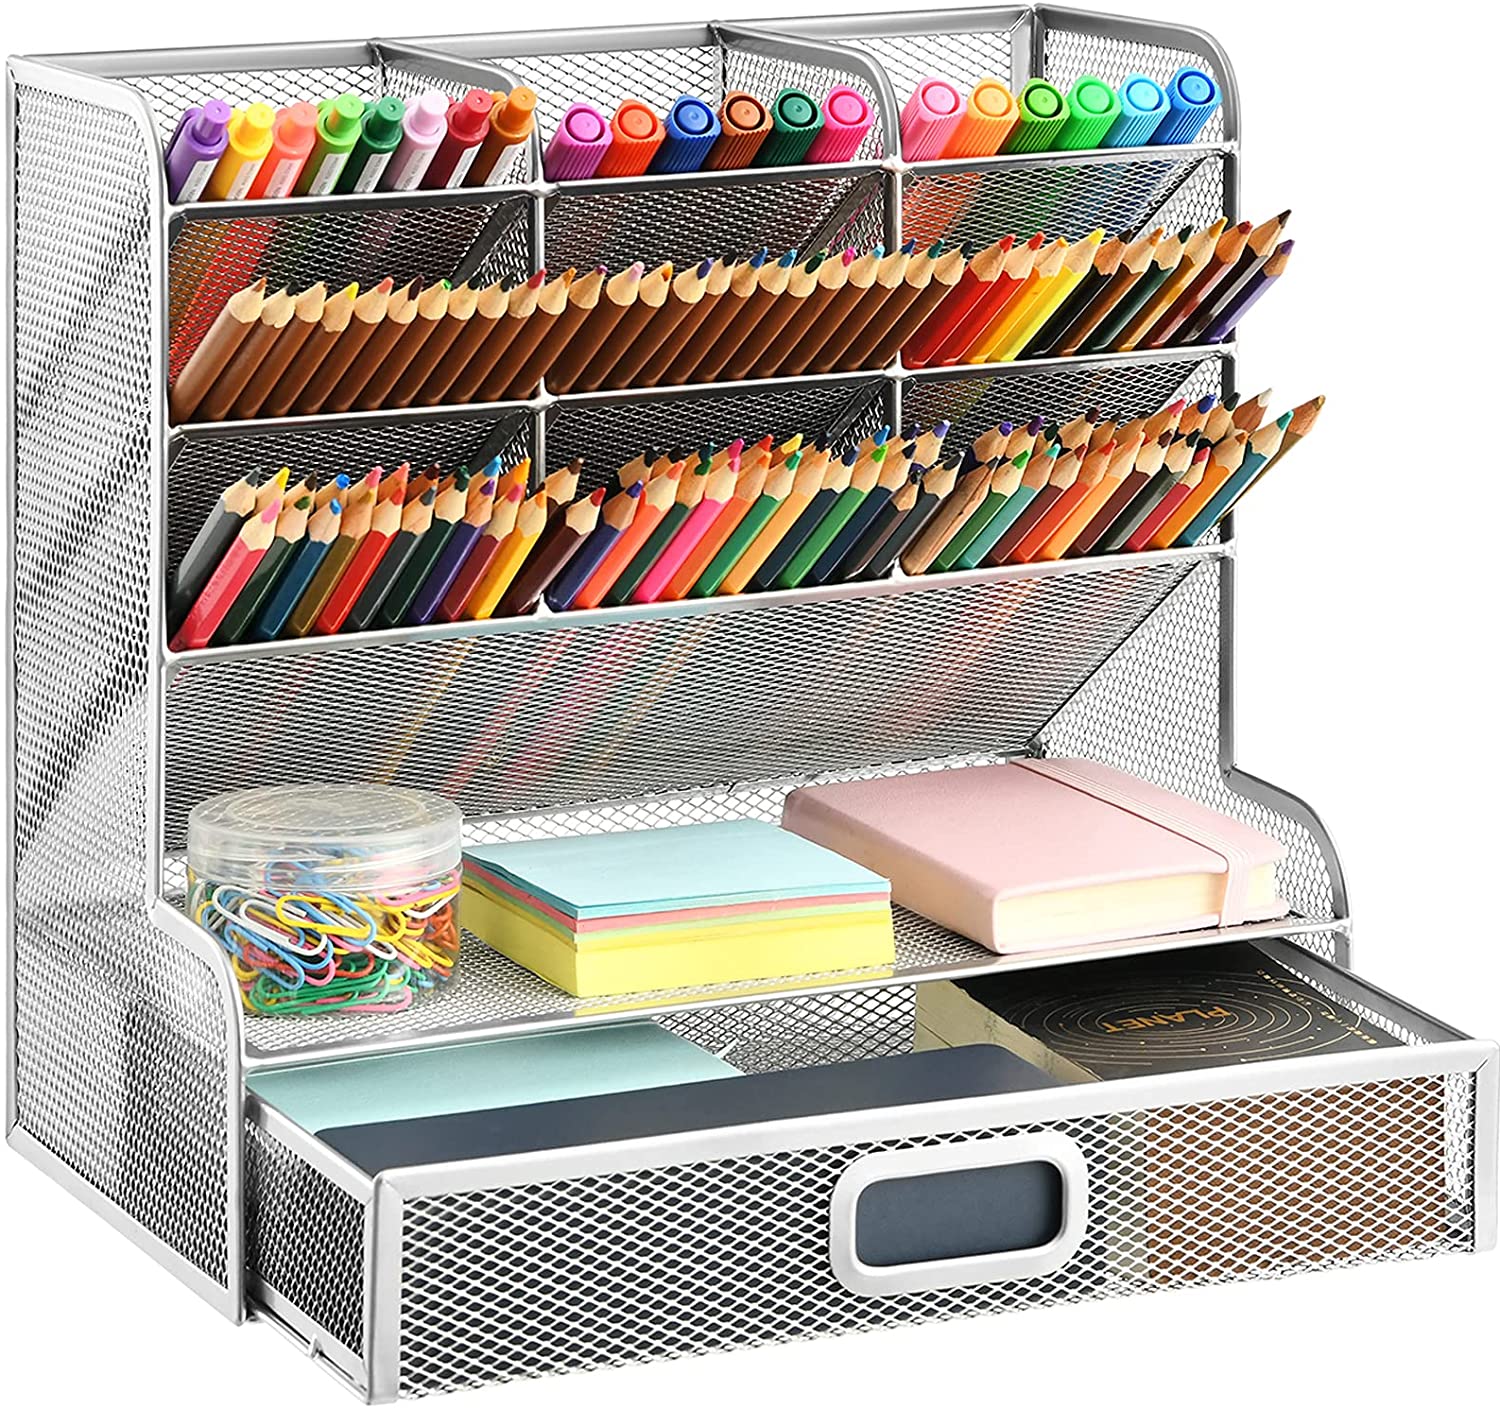 Marbrasse Upgraded Mesh Desk Supplies Organizer with Drawer, Office Desktop  Organizers and Accessories, Desk Stationery Organizer Caddy for School, 4